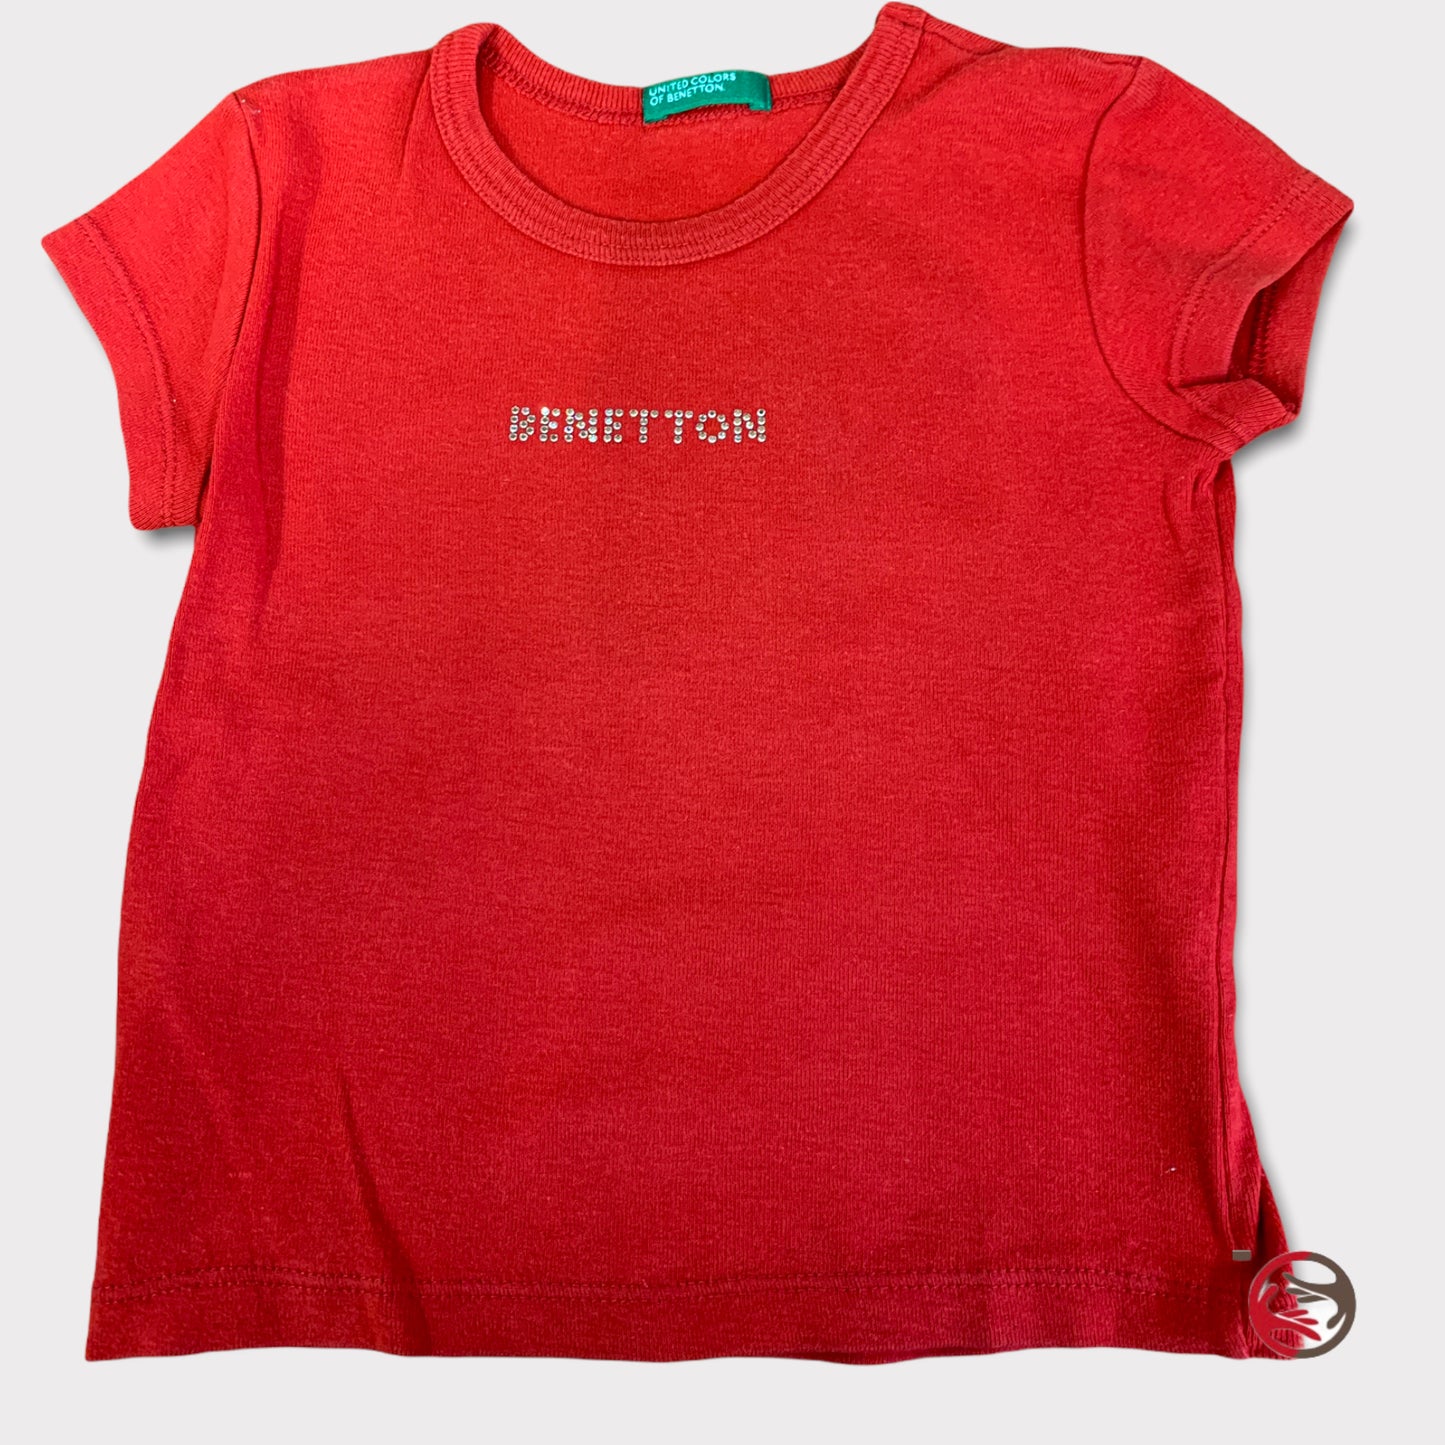 Maglietta t-shirt rossa Benetton bambina 24 mesi